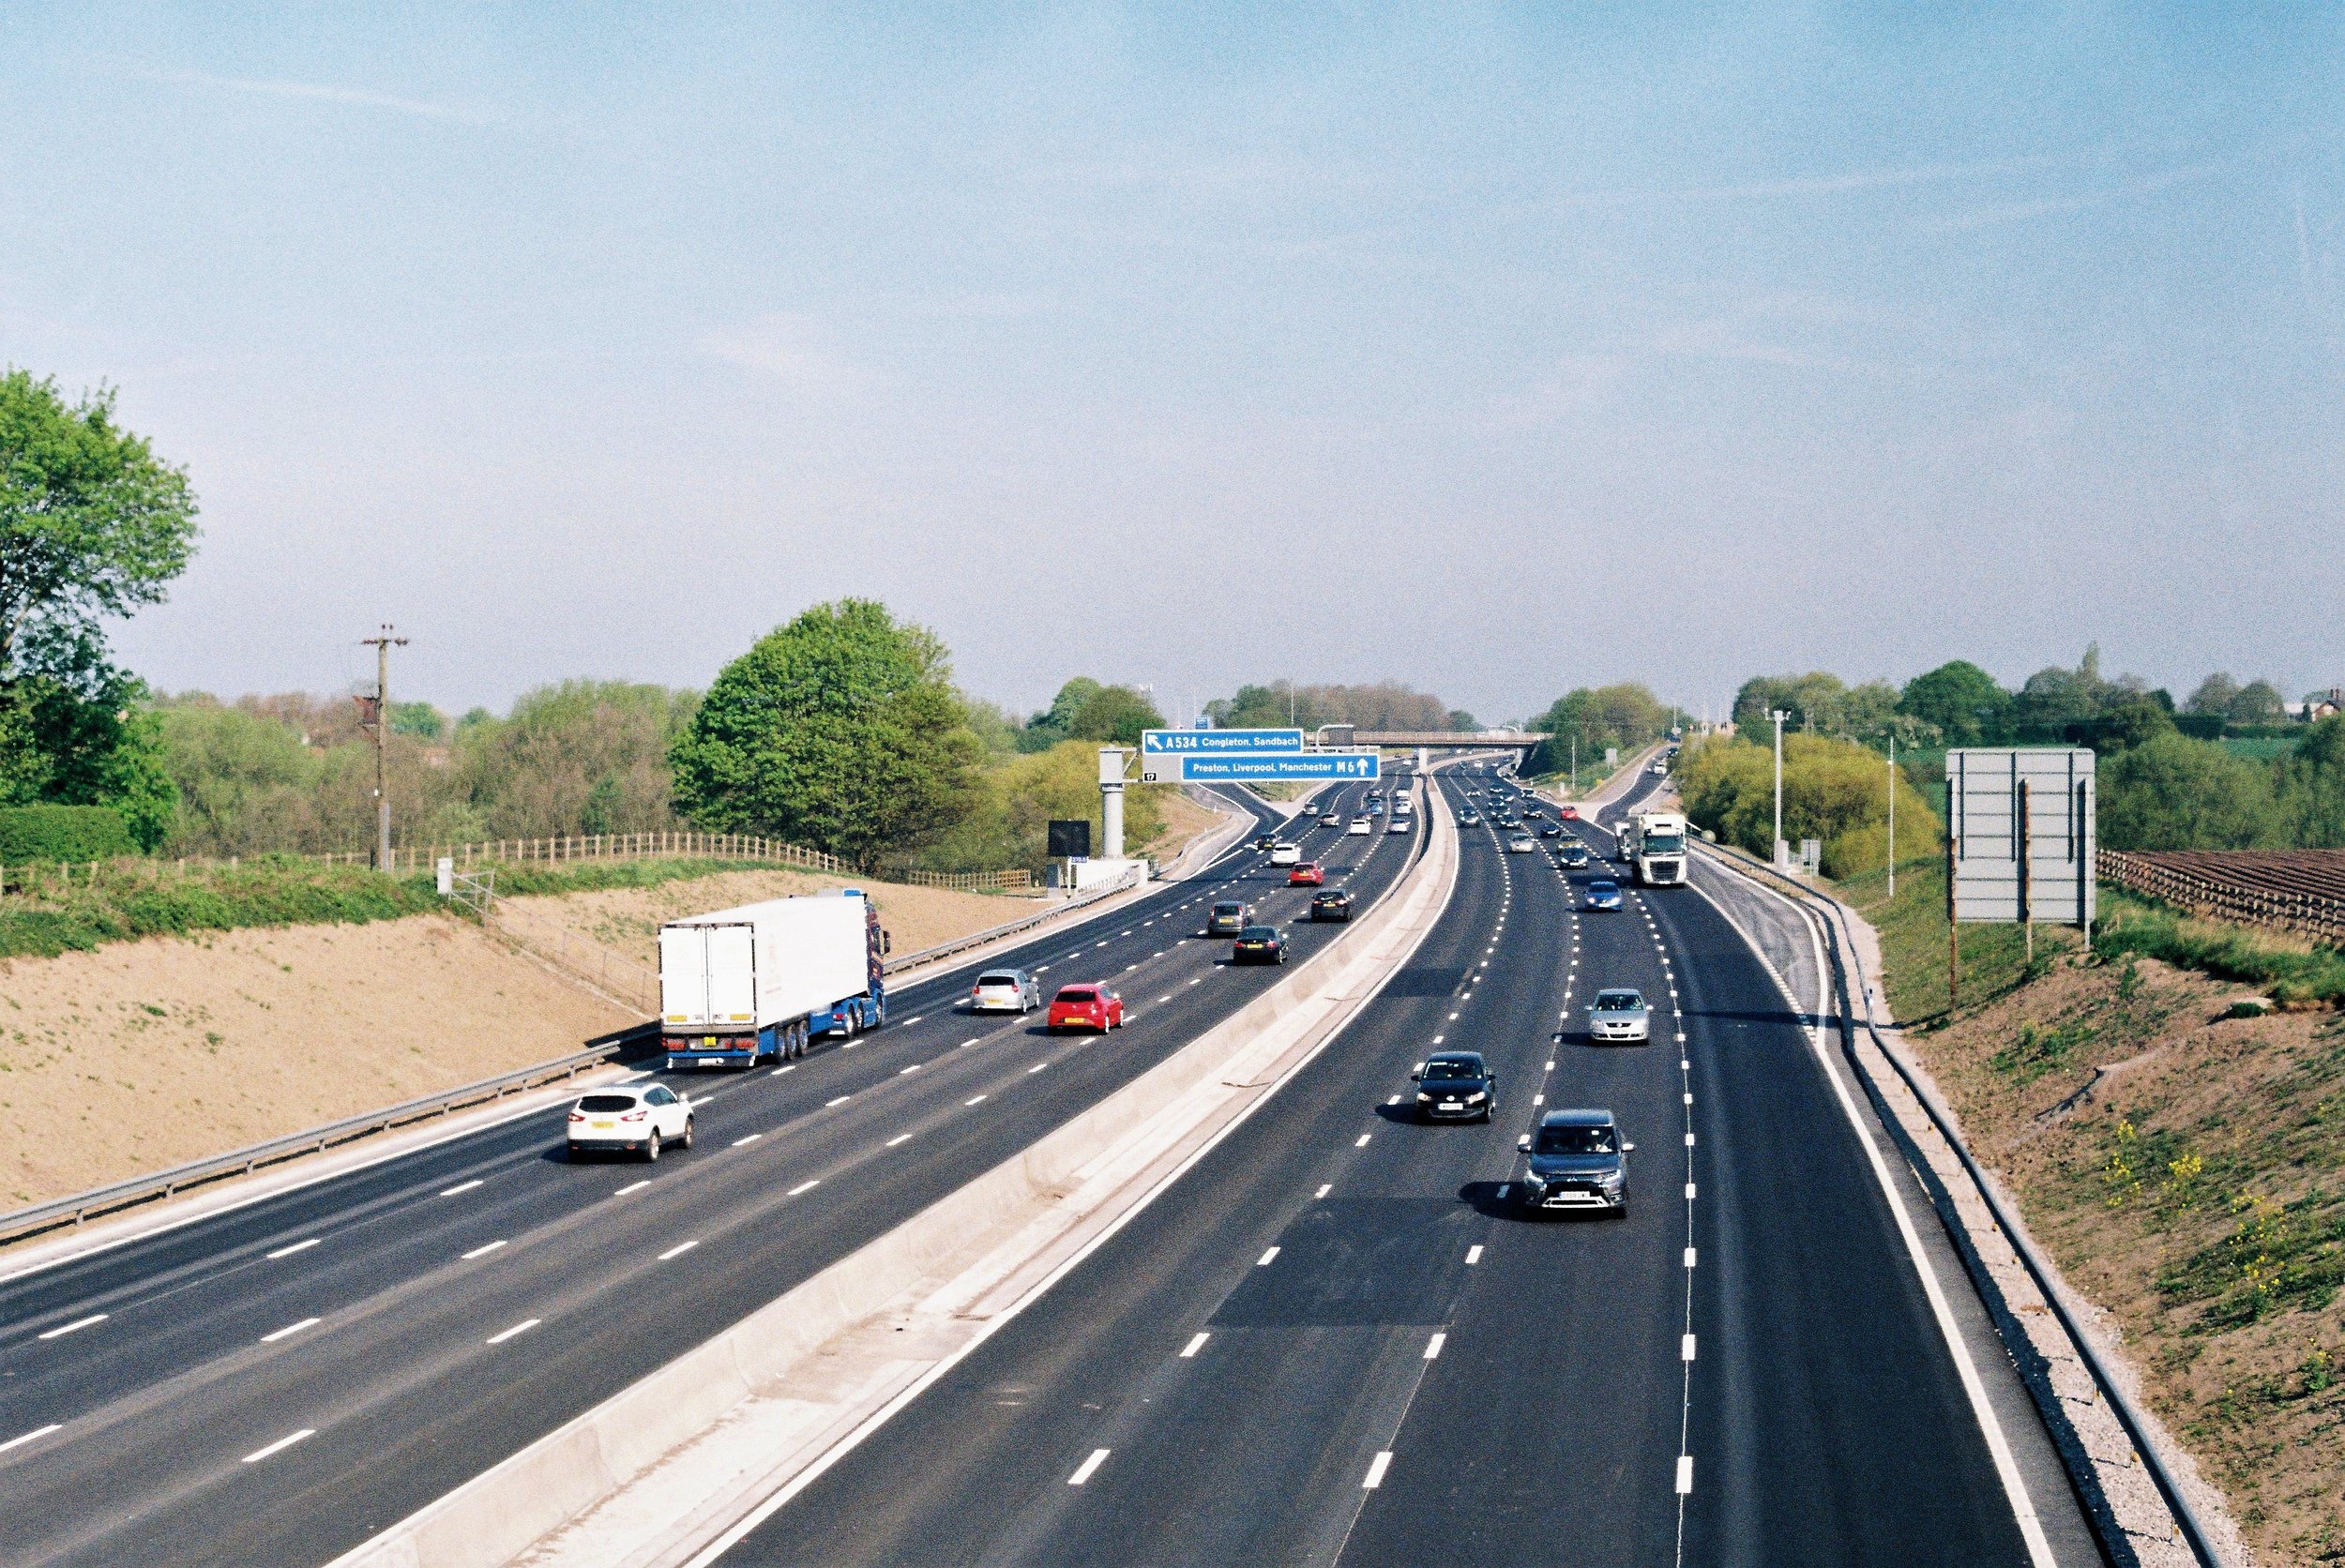 M6 motorway, Sandbach, 2019